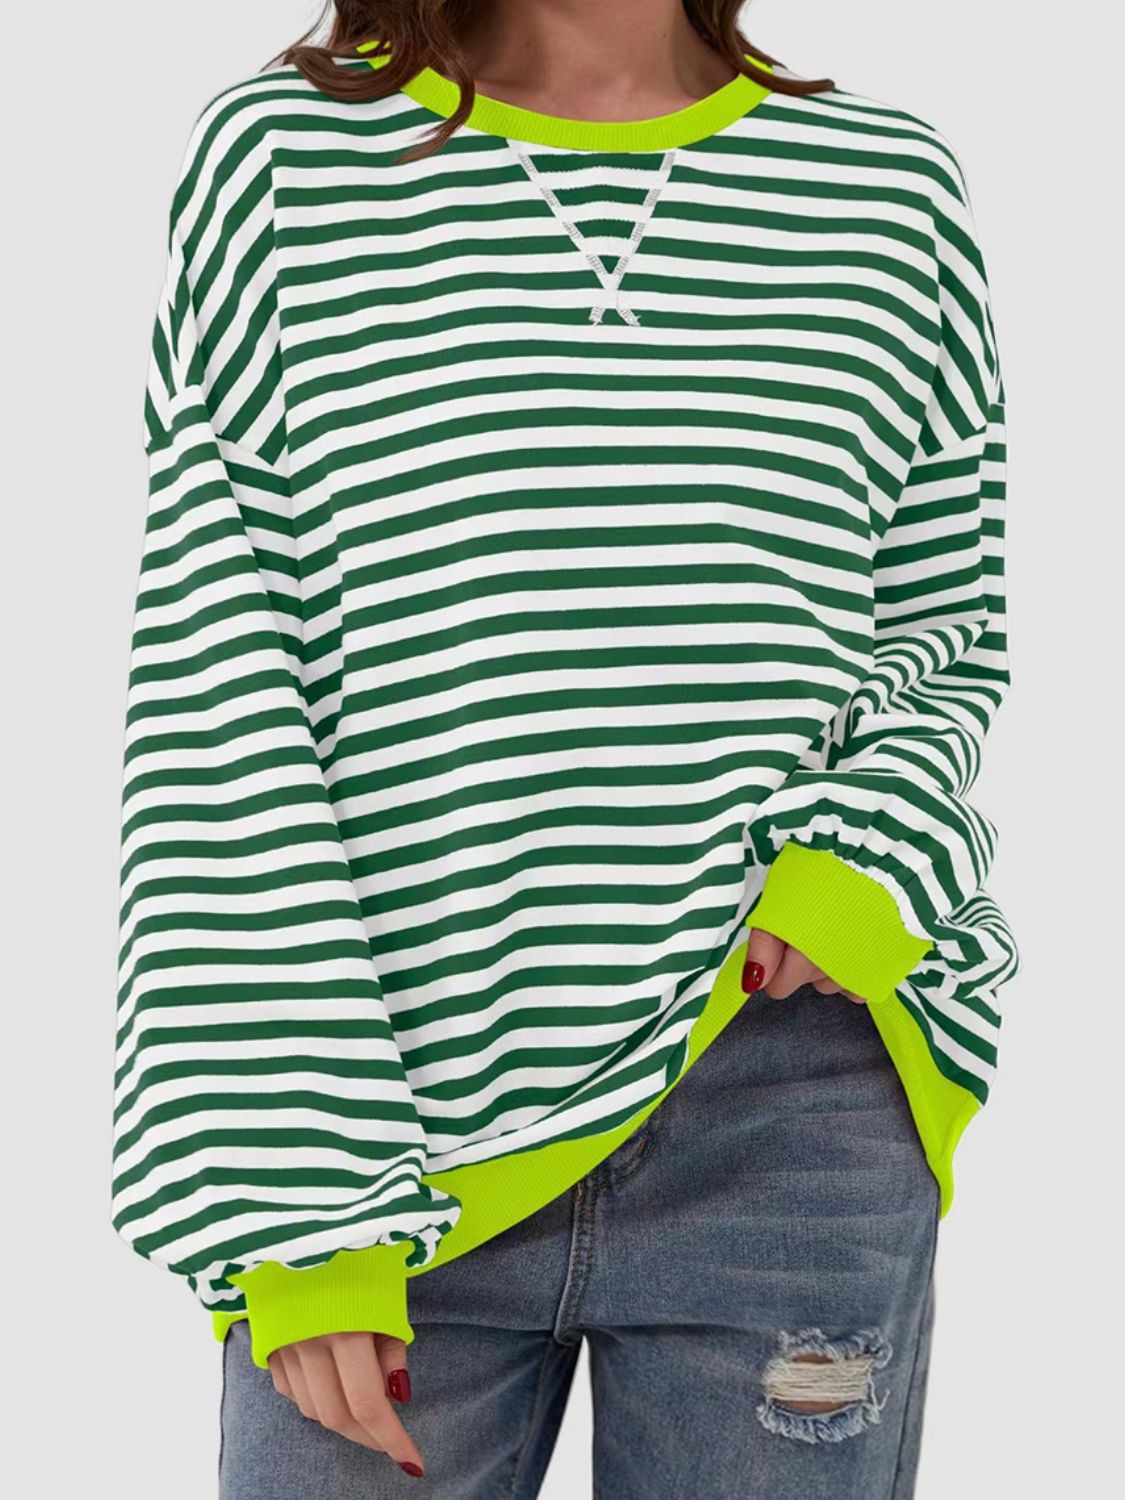 TEEK - Striped Round Neck Long Sleeve Shirt TOPS TEEK Trend   